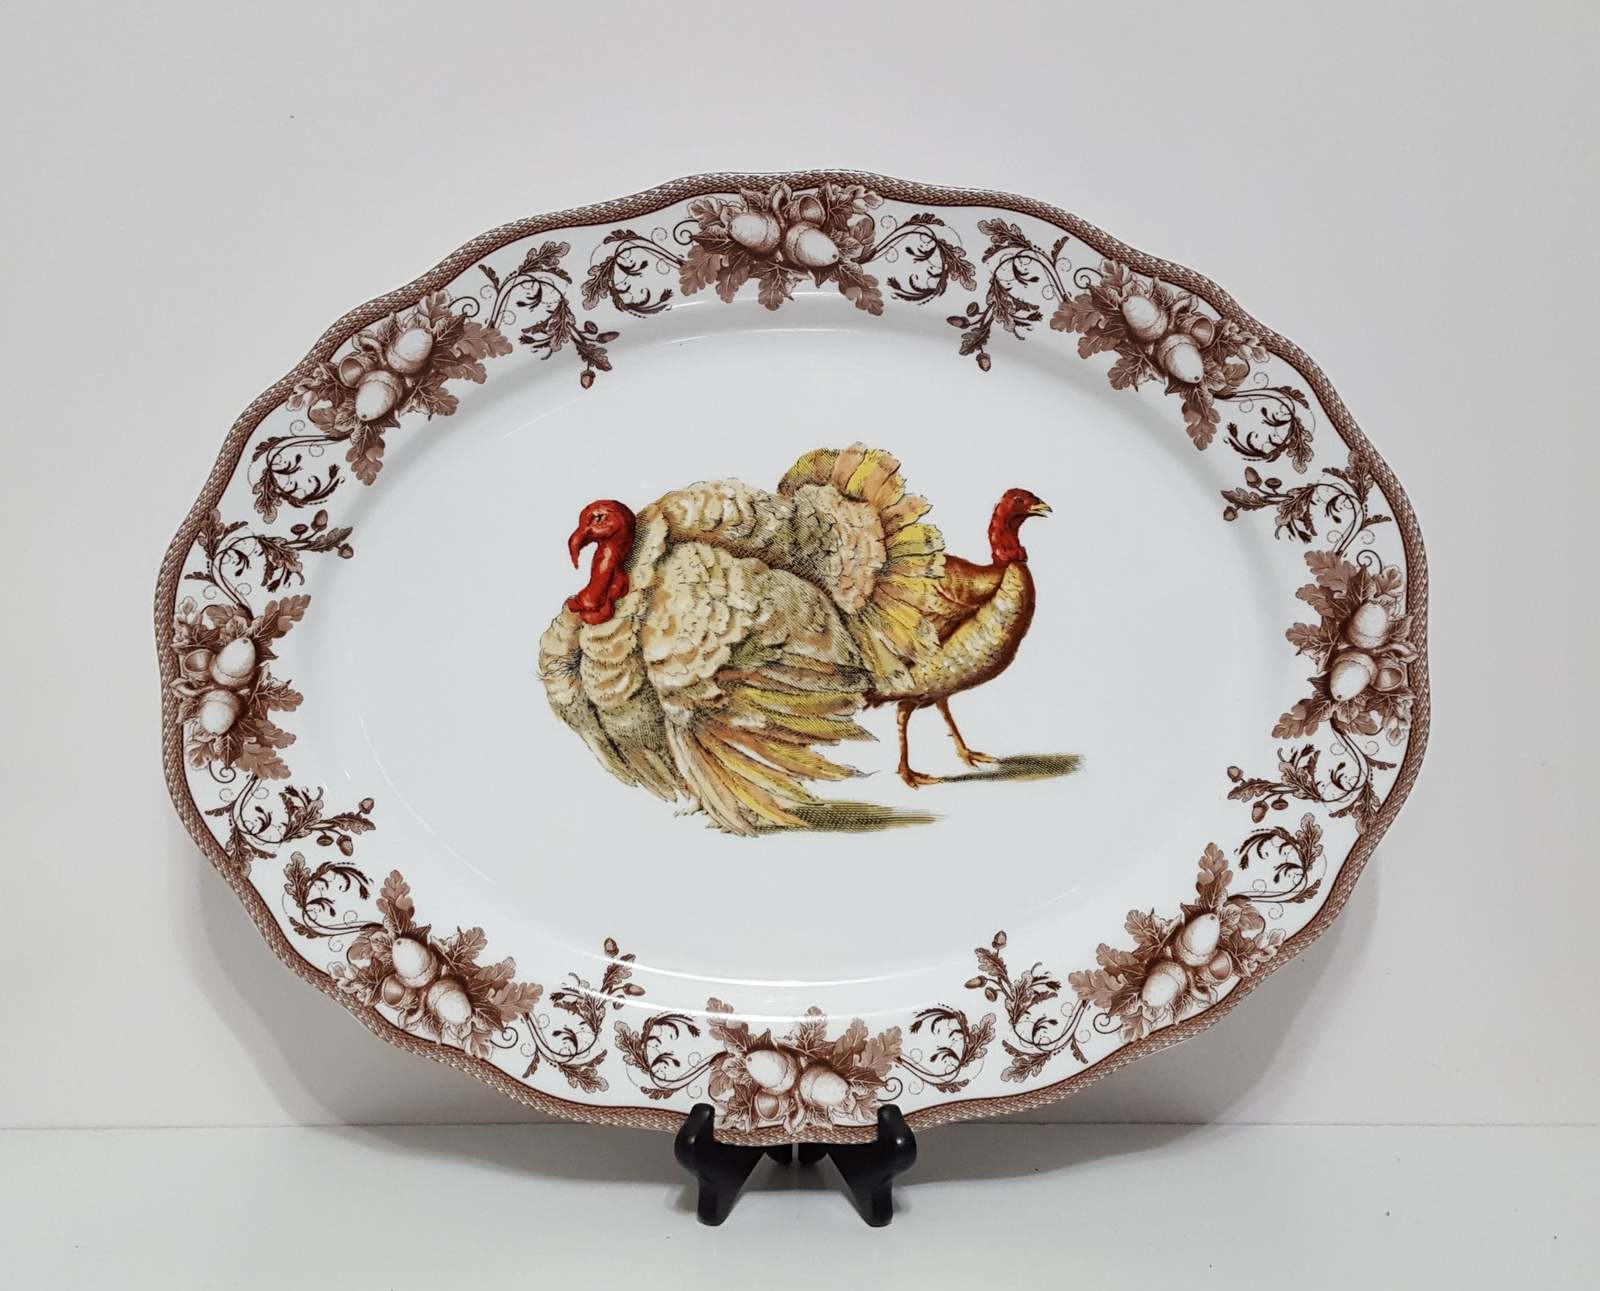 NEW RARE Williams Sonoma Large Oval Turkey Serving Platter 20" x 15.5" Porcelain - $299.99